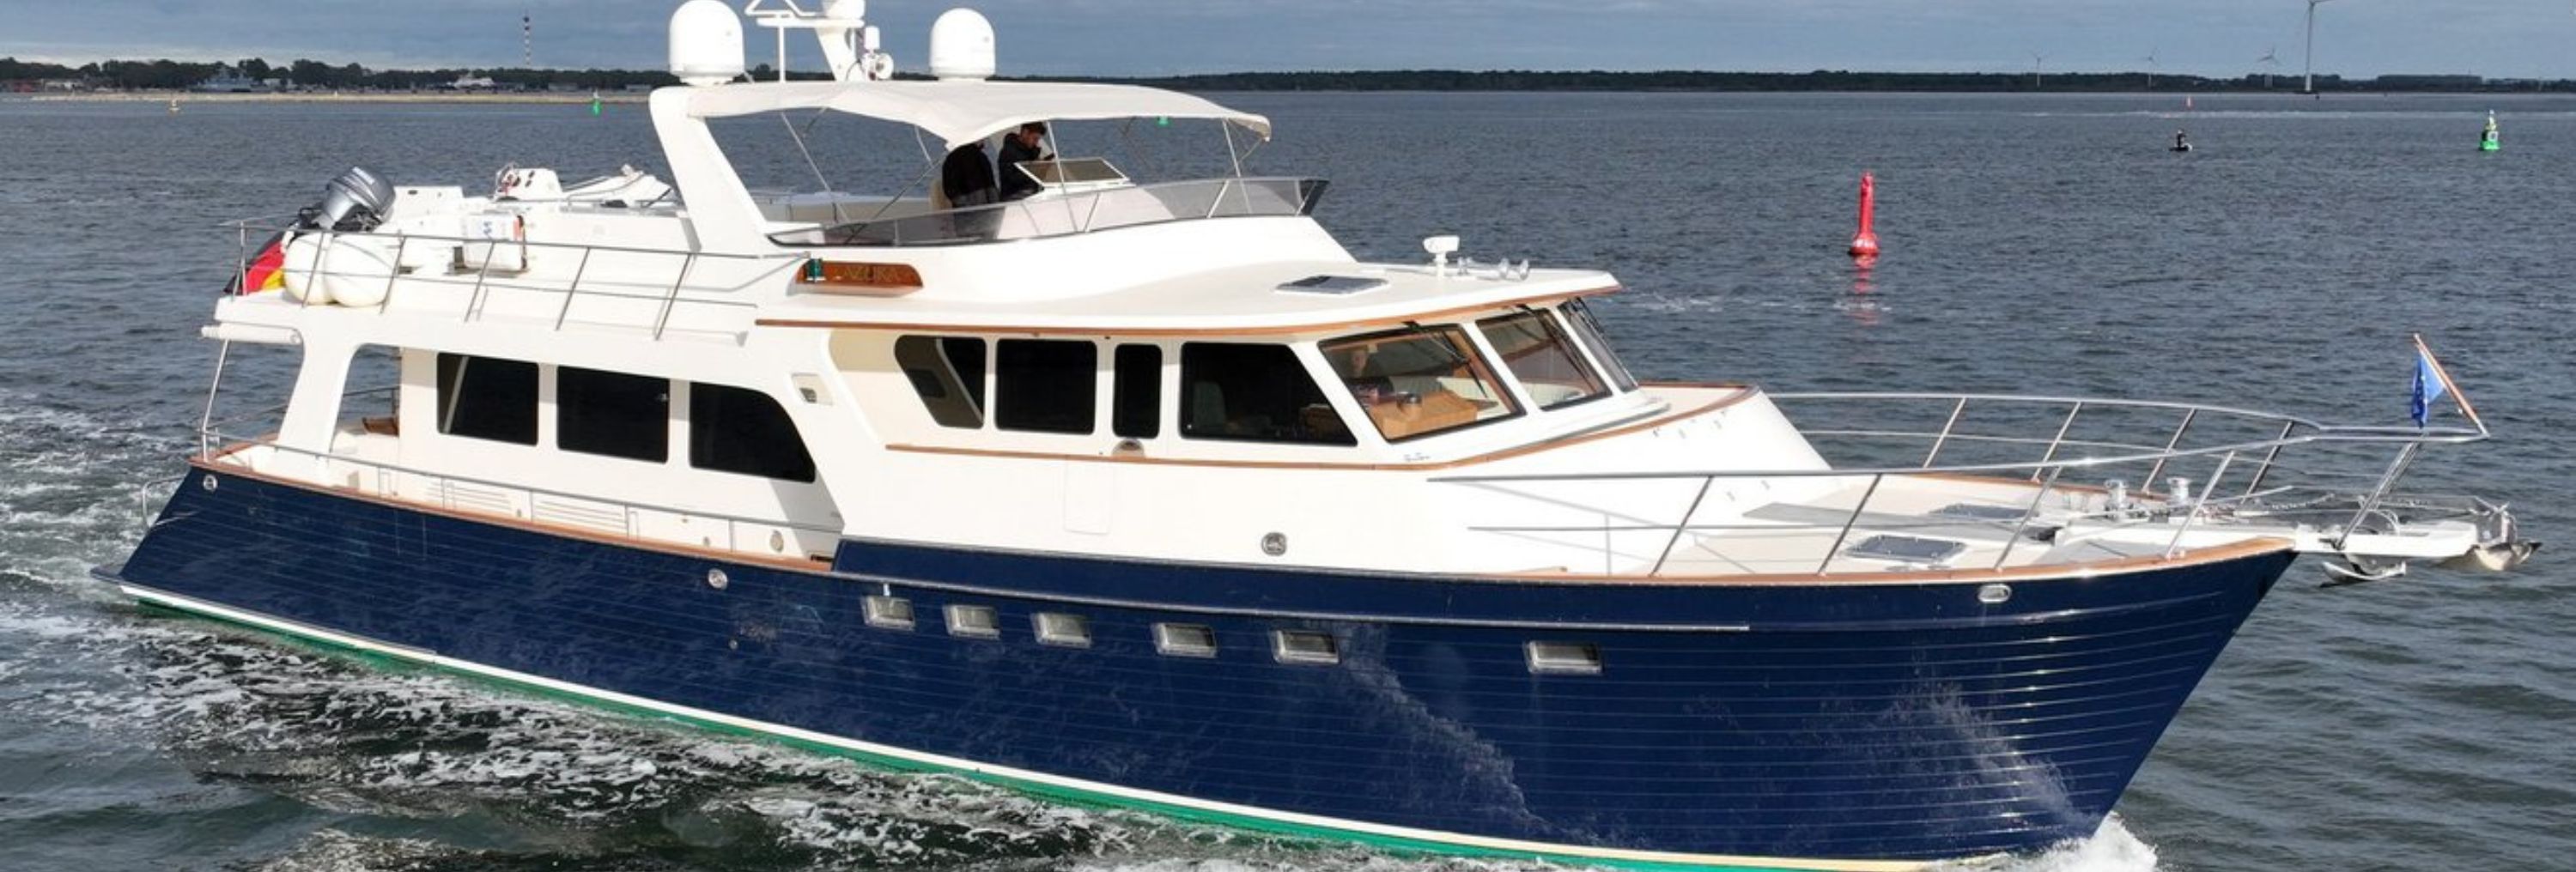 AZURA: New motor yacht for sale!